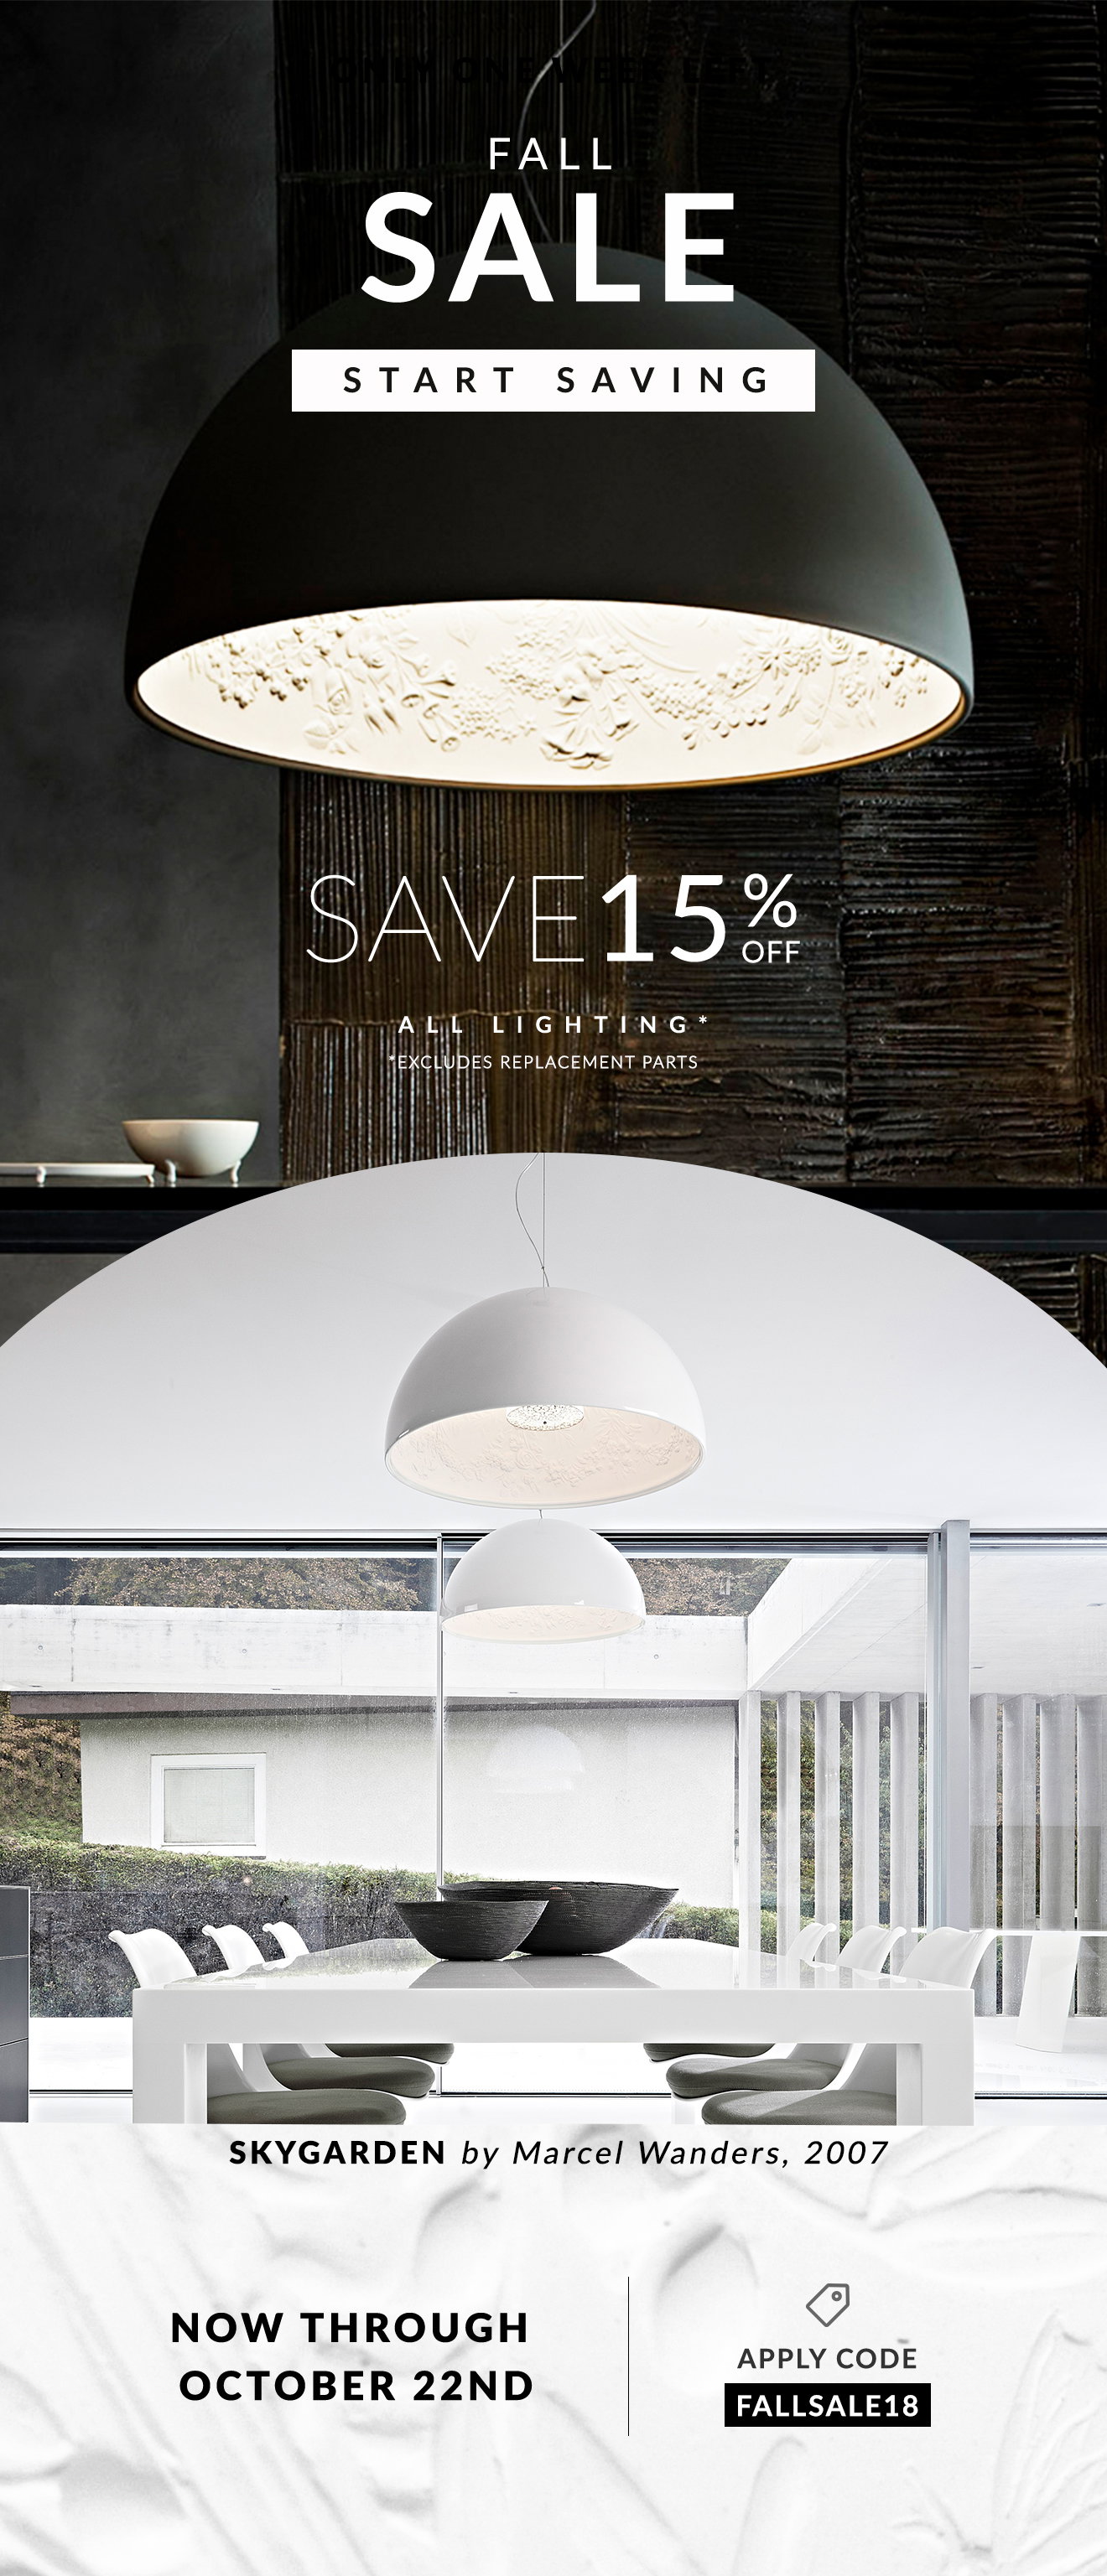 Skynest, the new Flos lamp designed by Marcel Wanders studio